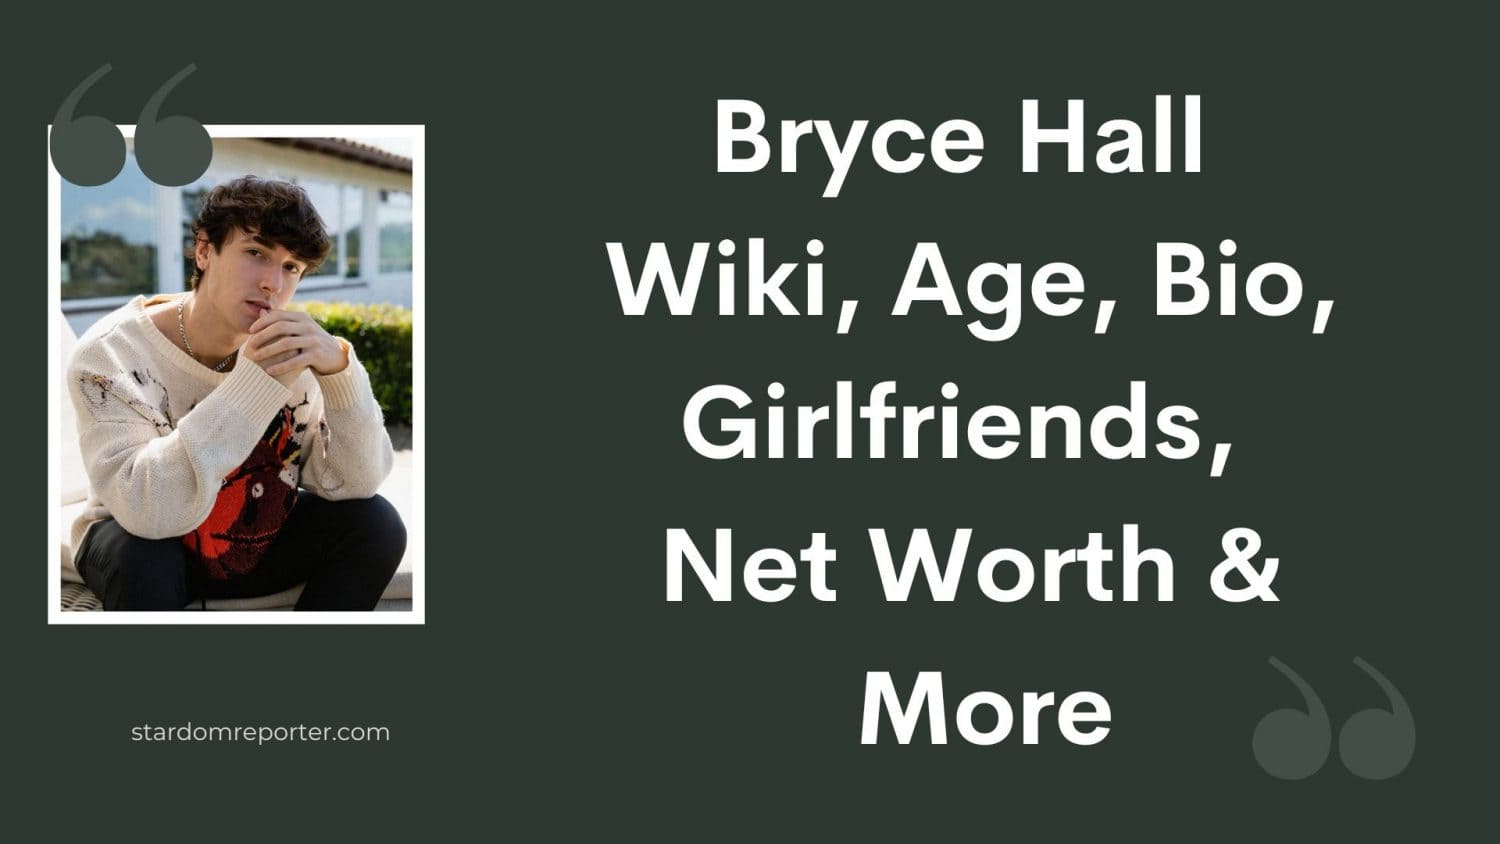 Bryce Hall Wiki, Age, Bio, Girlfriends, Net Worth & More - 25